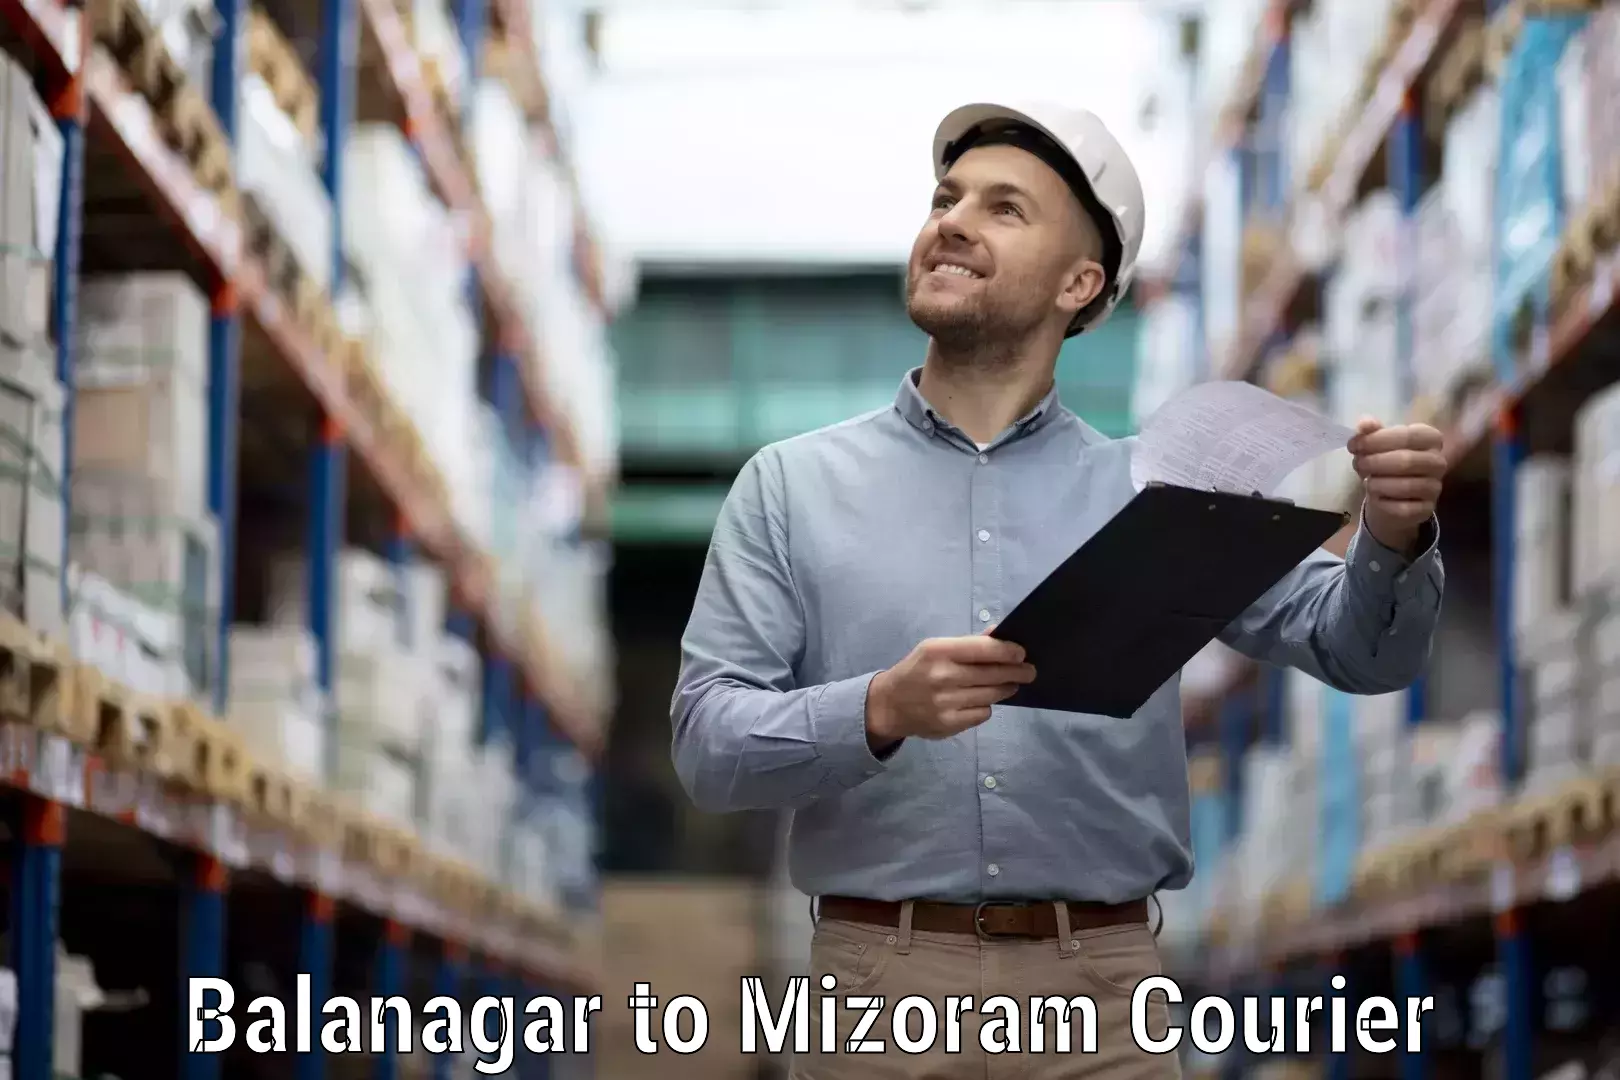 Package delivery network Balanagar to Mizoram